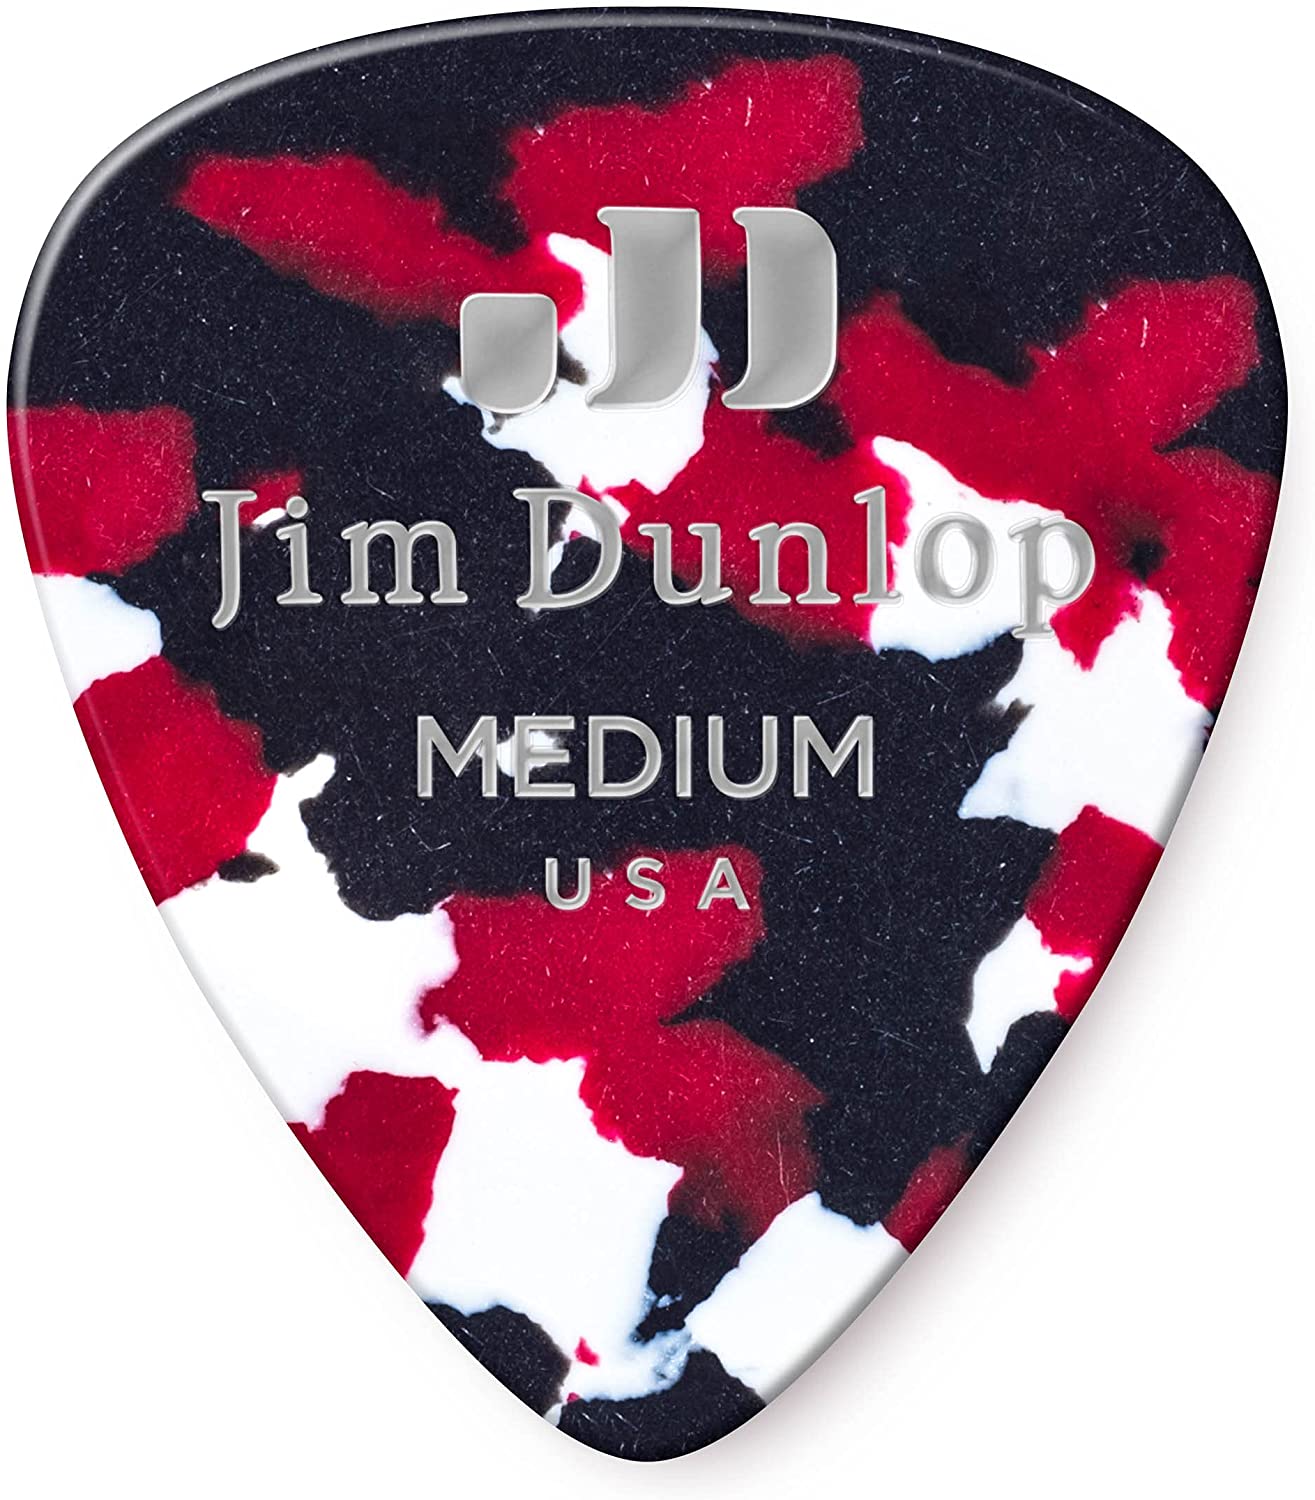 Dunlop Confetti Celluloid Medium Guitar Pick